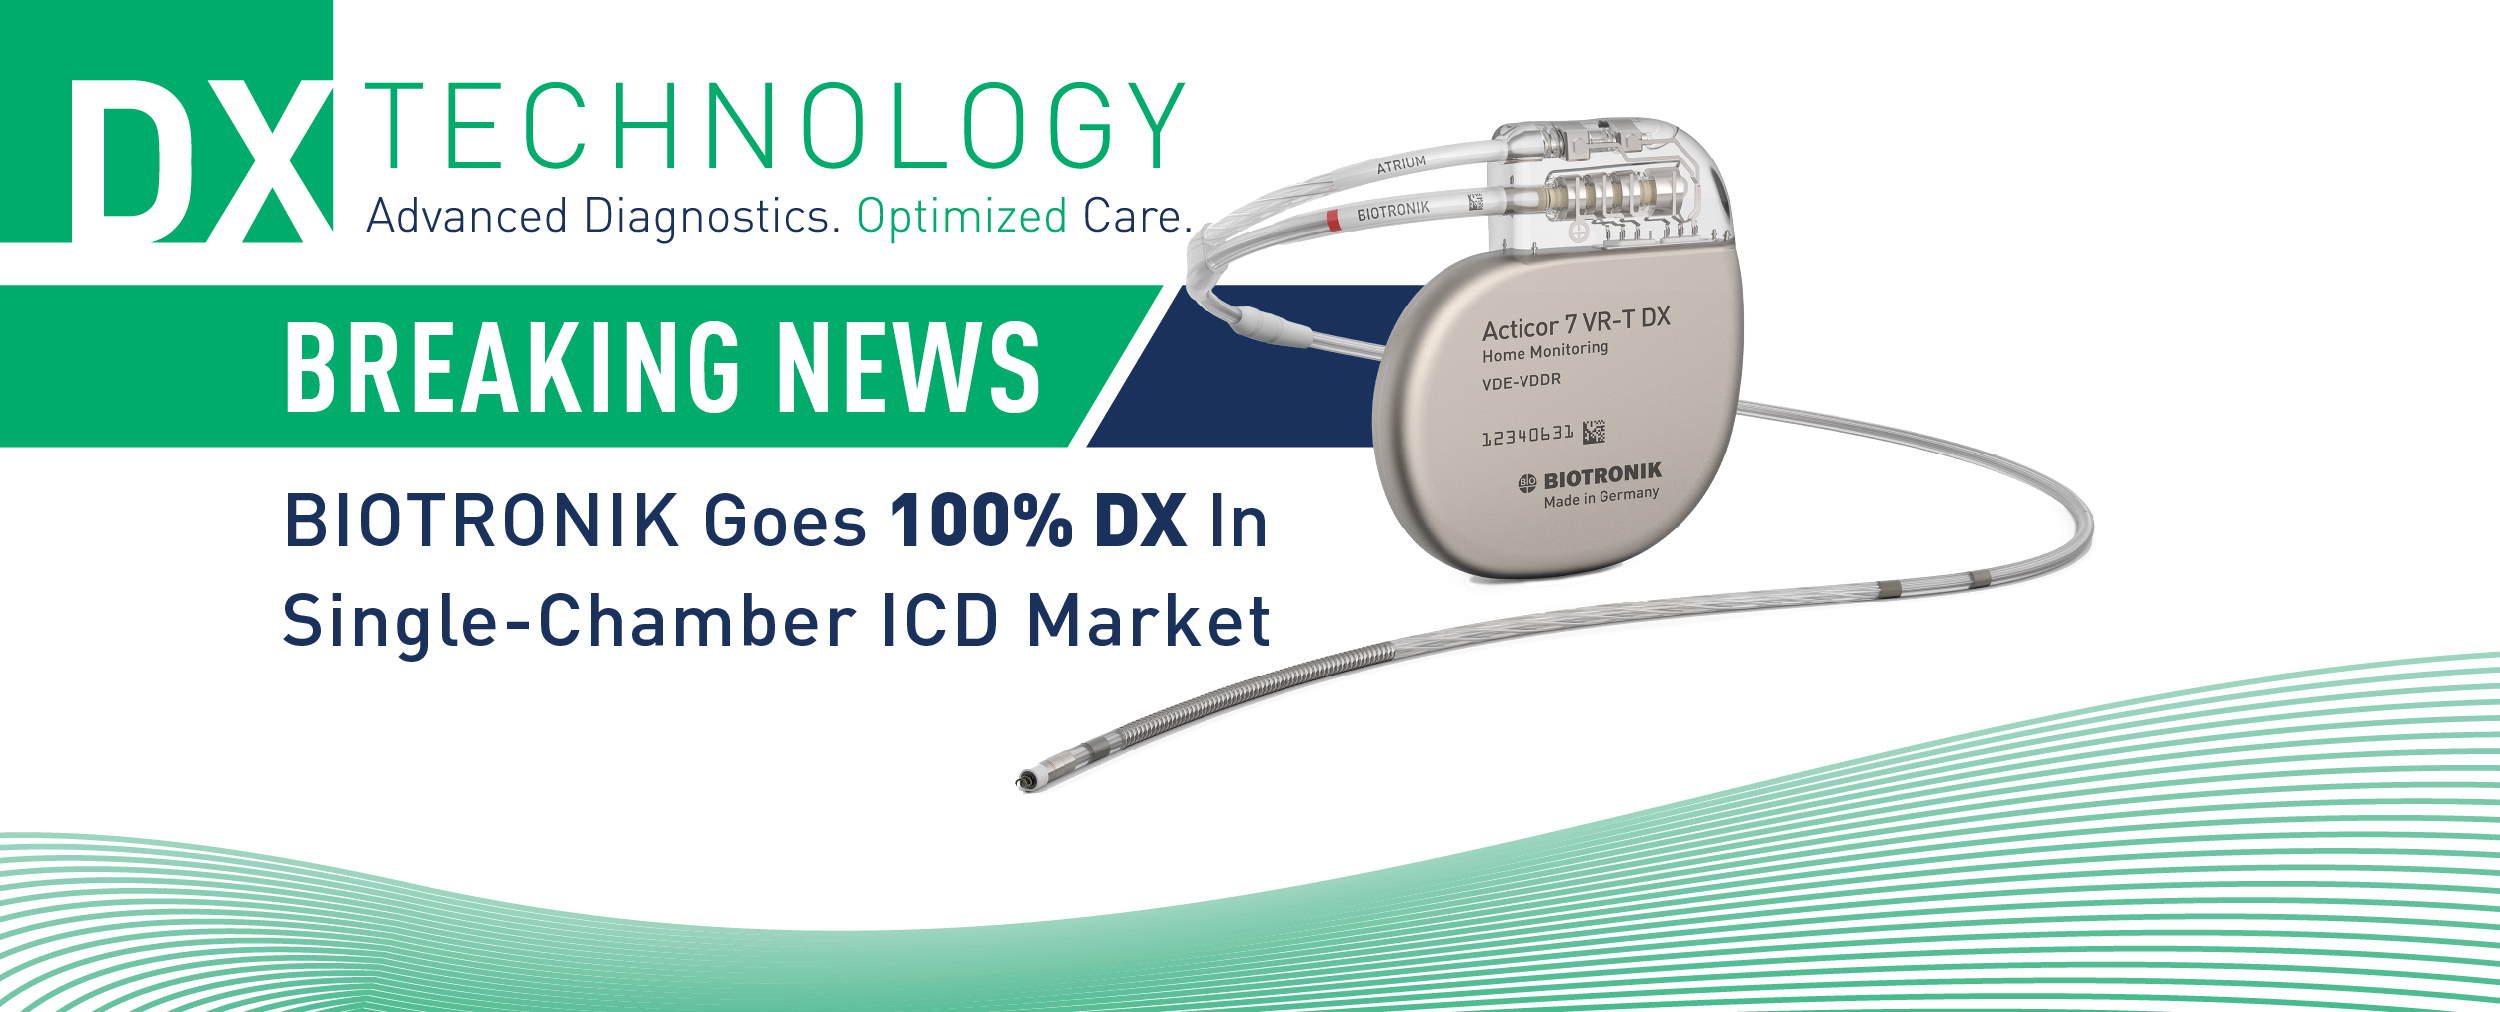 BIOTRONIK goes 100% DX in single-chamber ICD market